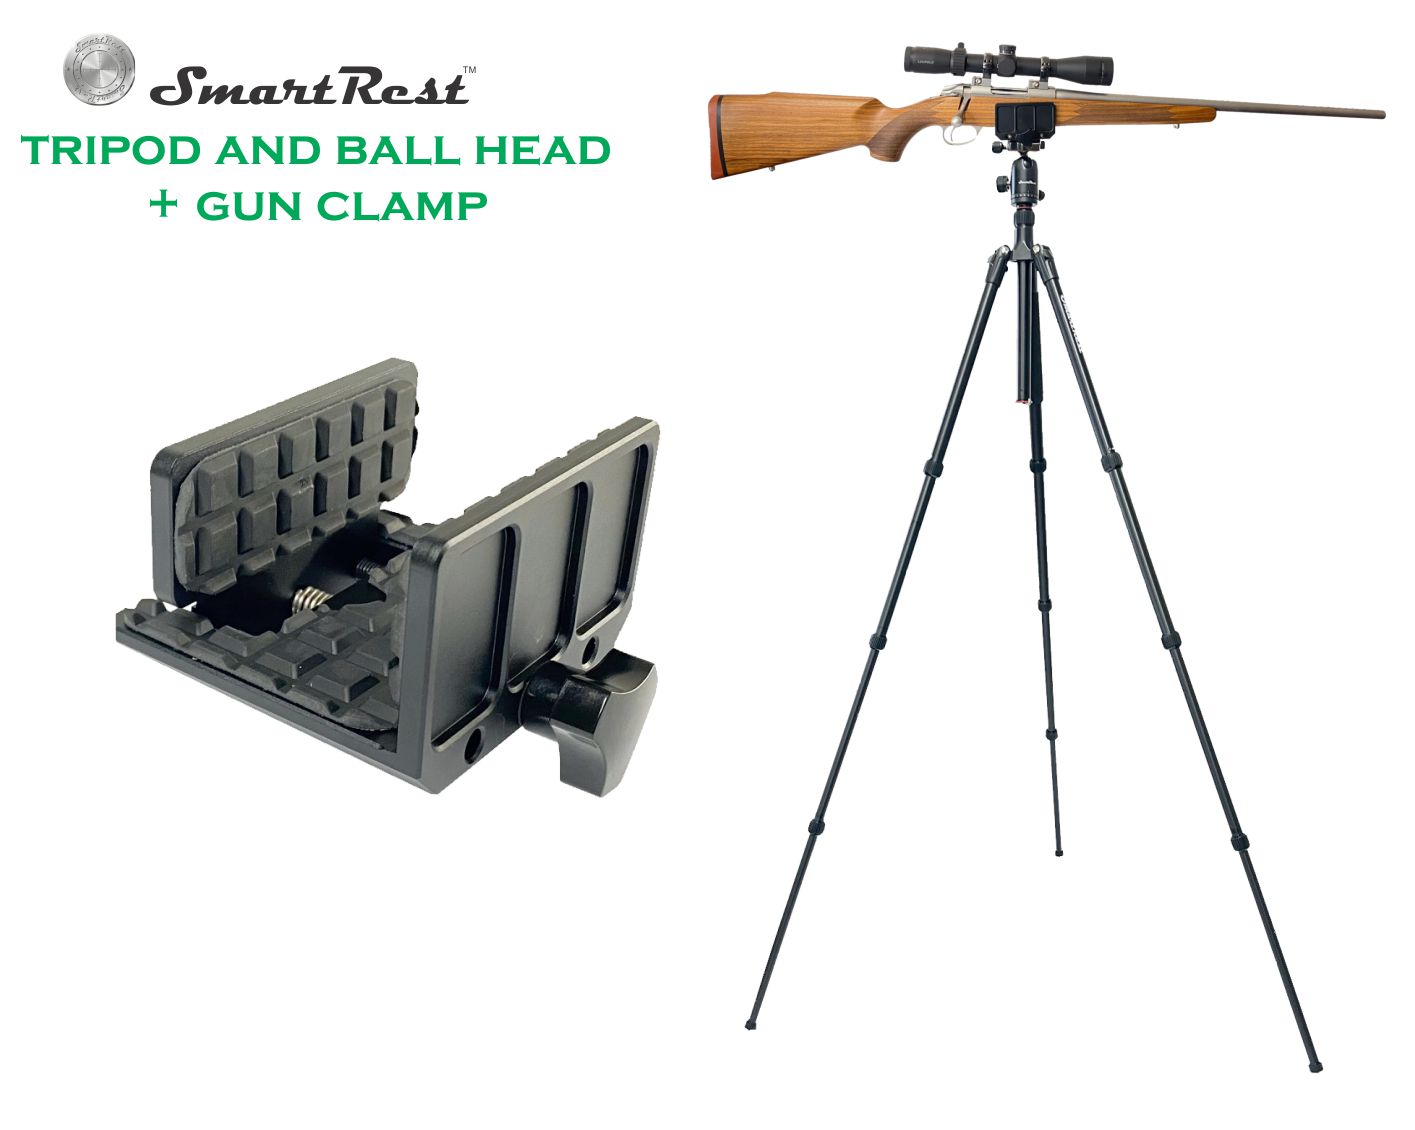 SmartRest Tripod + Ball Head + GUN CLAMP